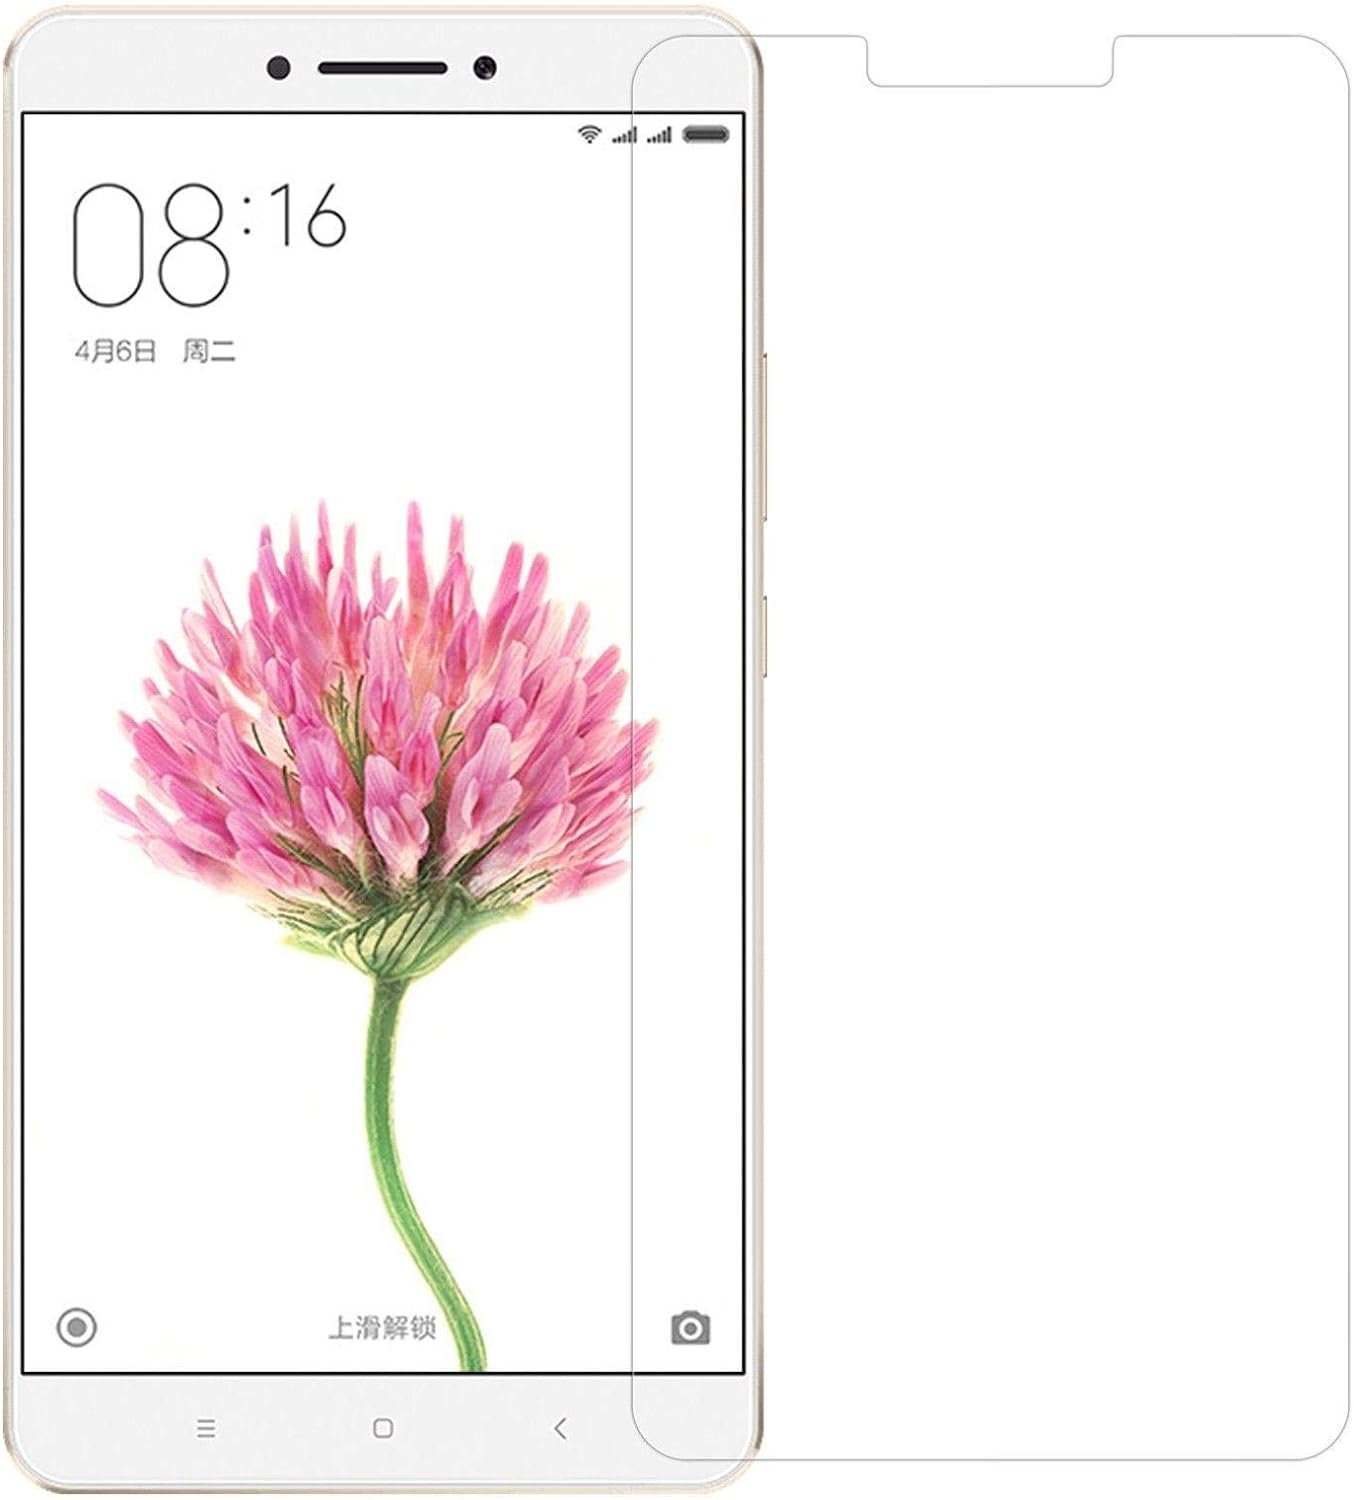 Xiaomi Tempered Glass Screen Protector for Xiaomi Mi Max - Clear